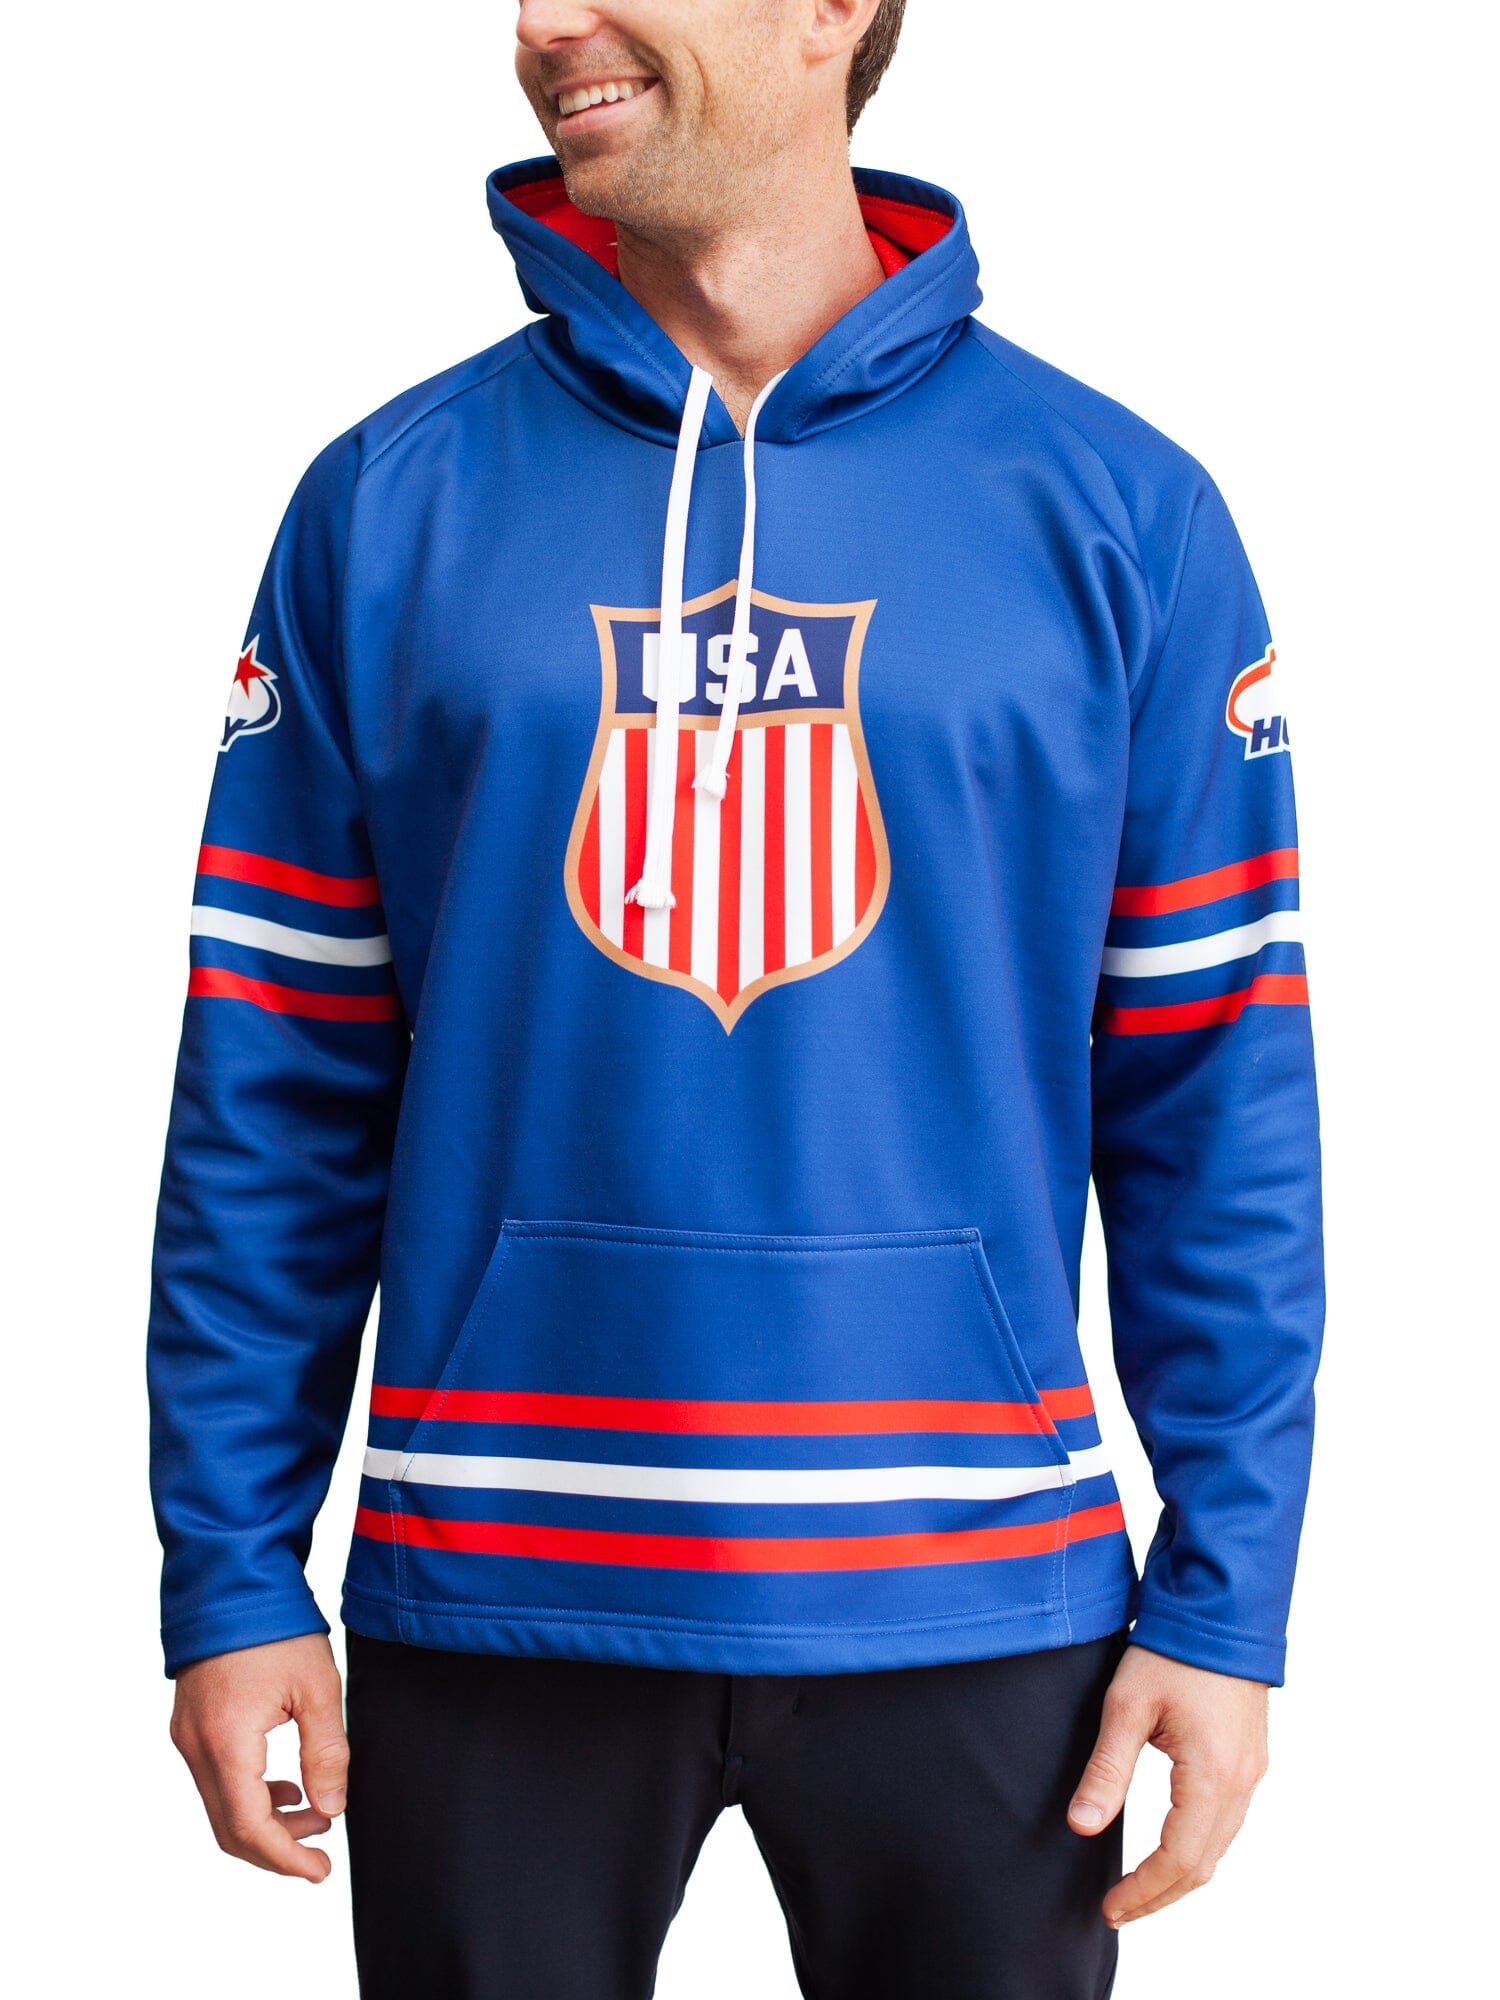 Old Time Hockey Navy Blue Buffalo Sabres Sweatshirt Men's Size XL NHL